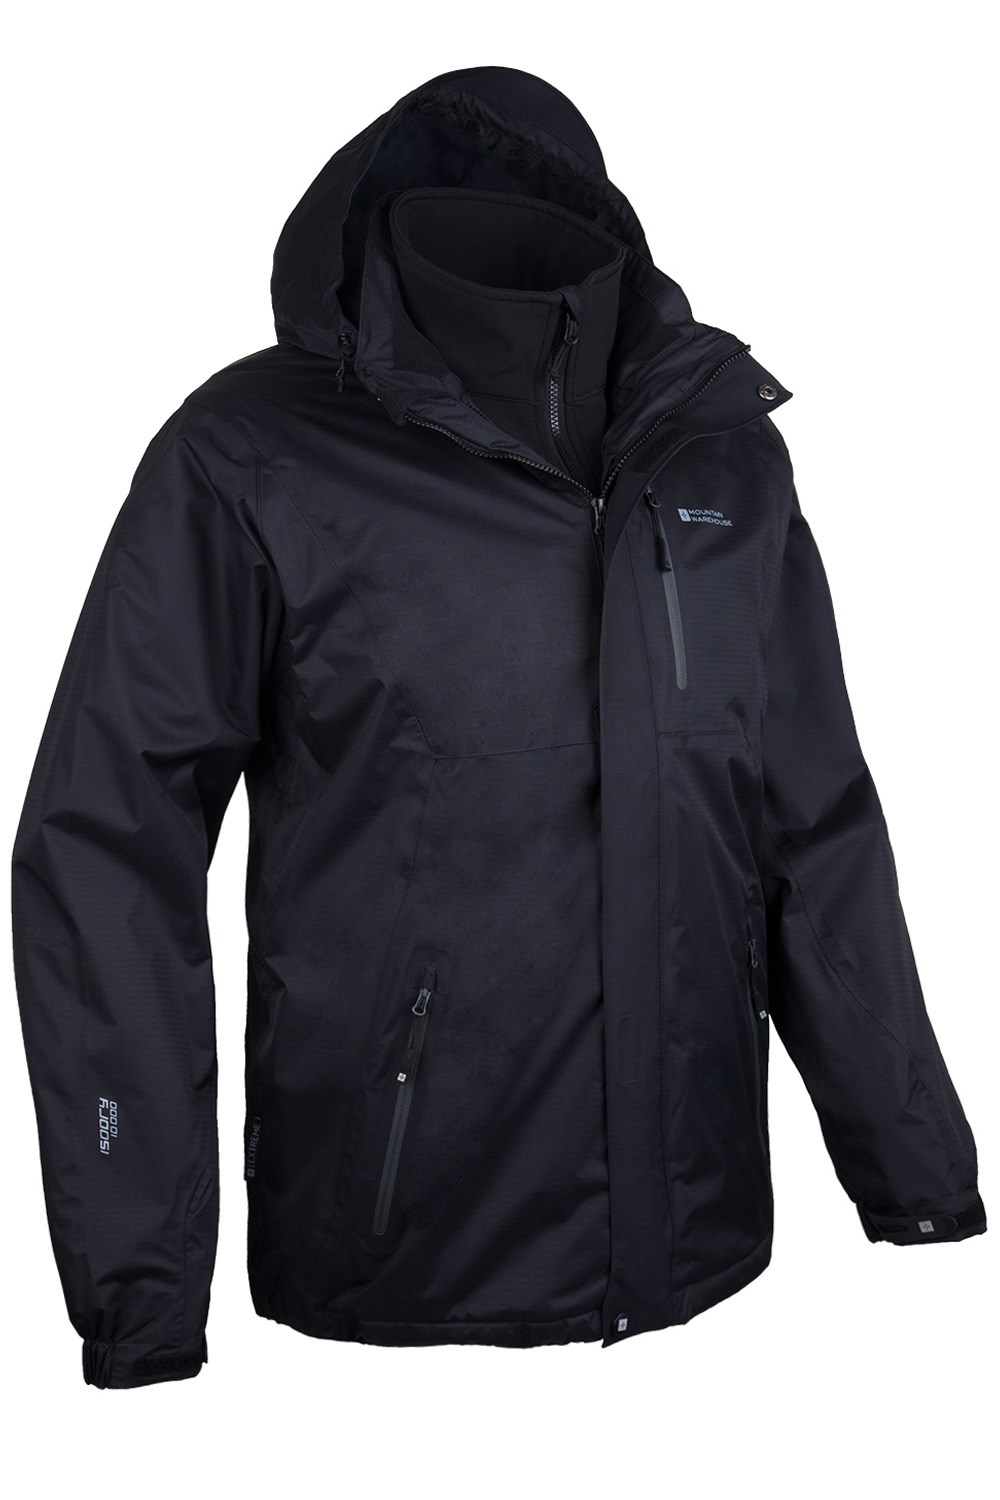 Mountain Warehouse Bracken Extreme 3 in 1 Mens Waterproof Jacket | eBay